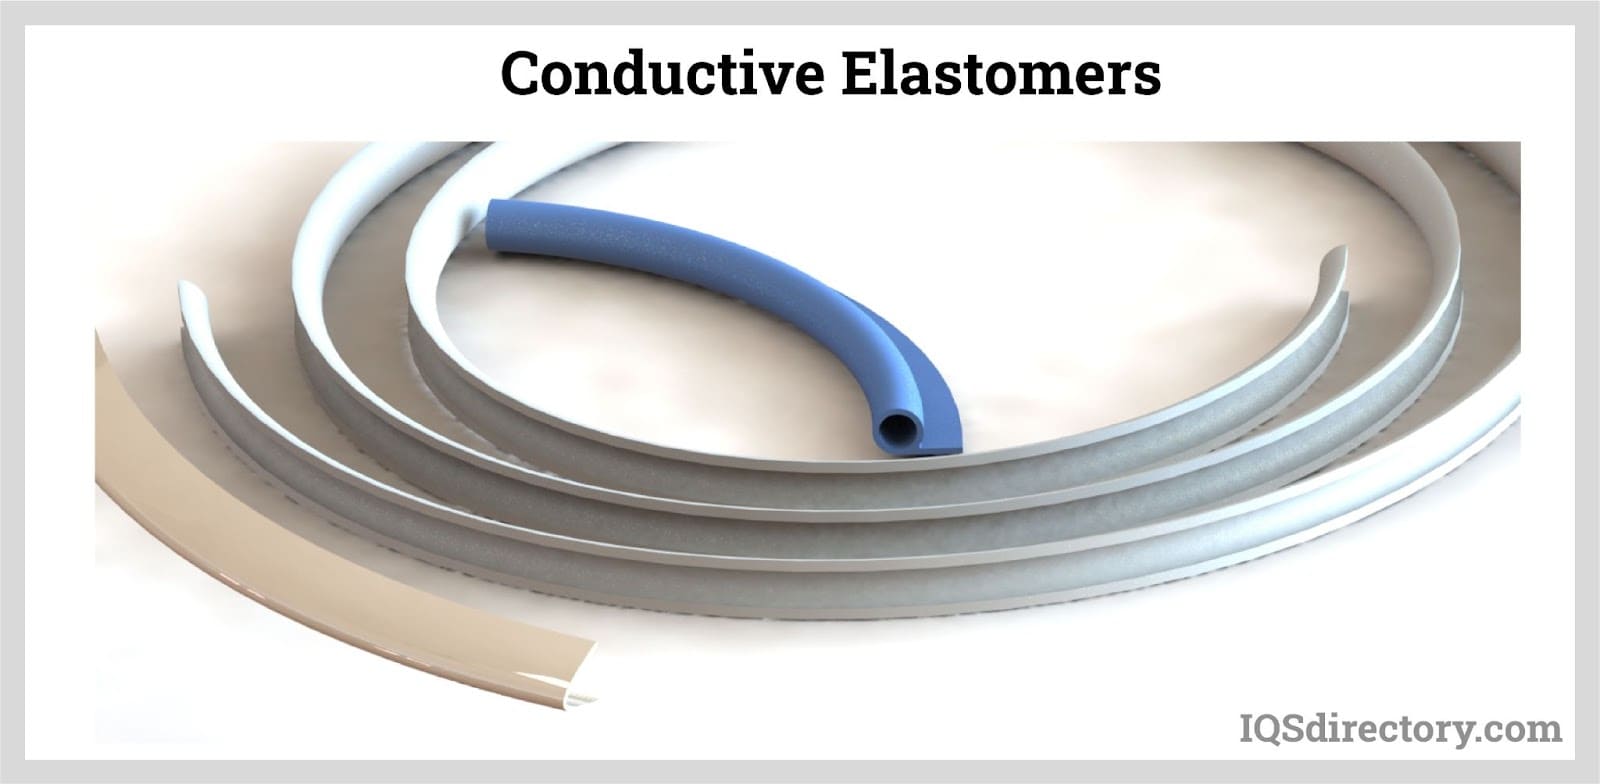 Conductive Elastomers